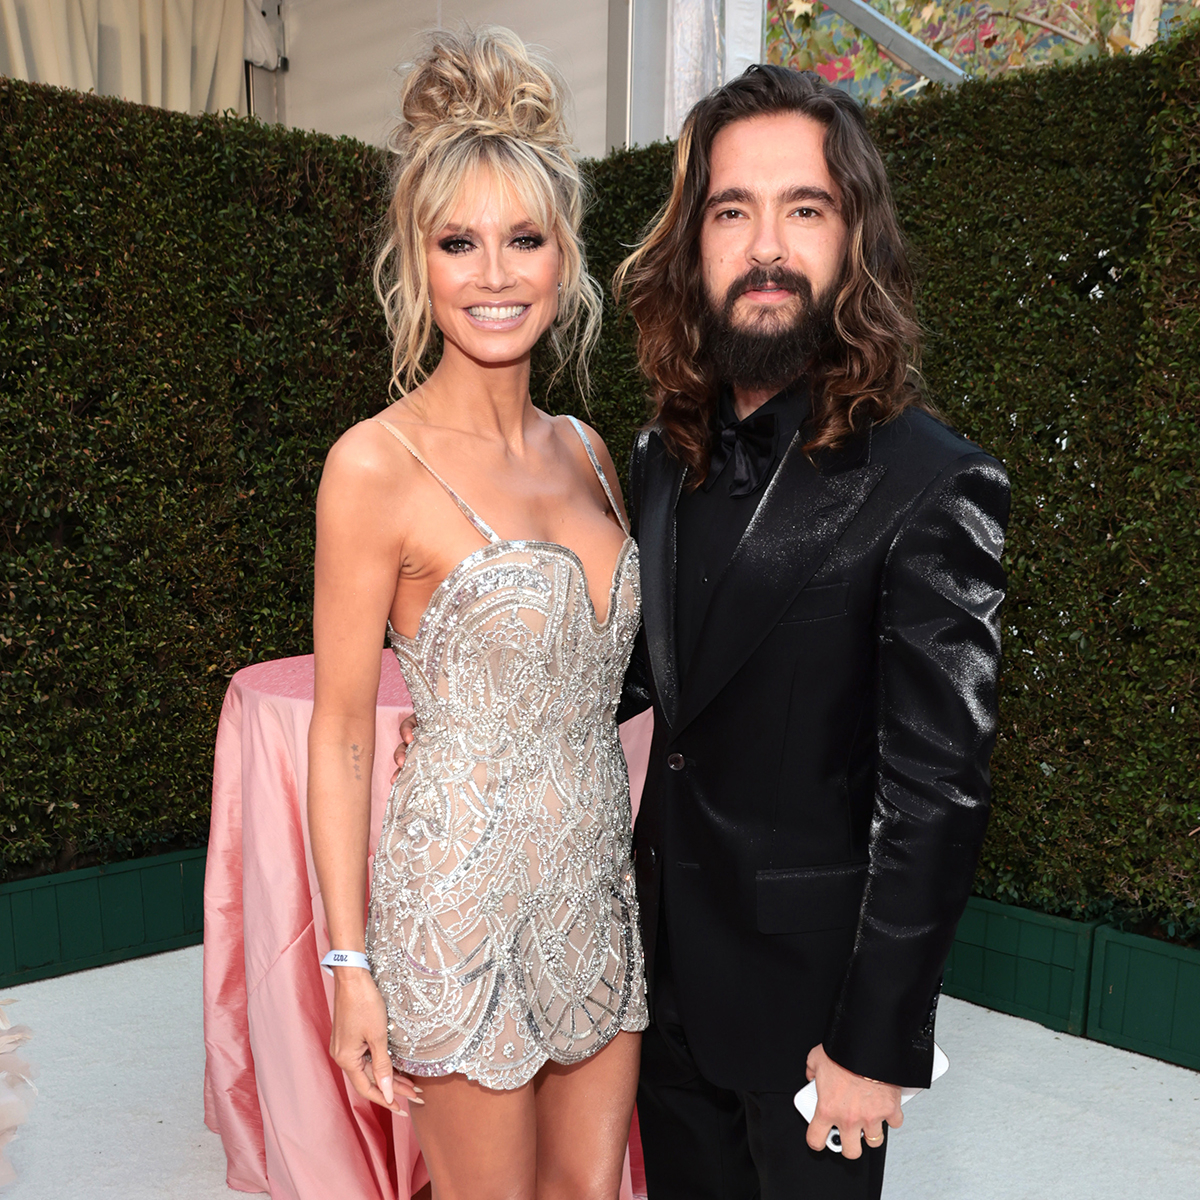 Heidi Klum Says She “Finally Found the One” With Husband Tom Kaulitz